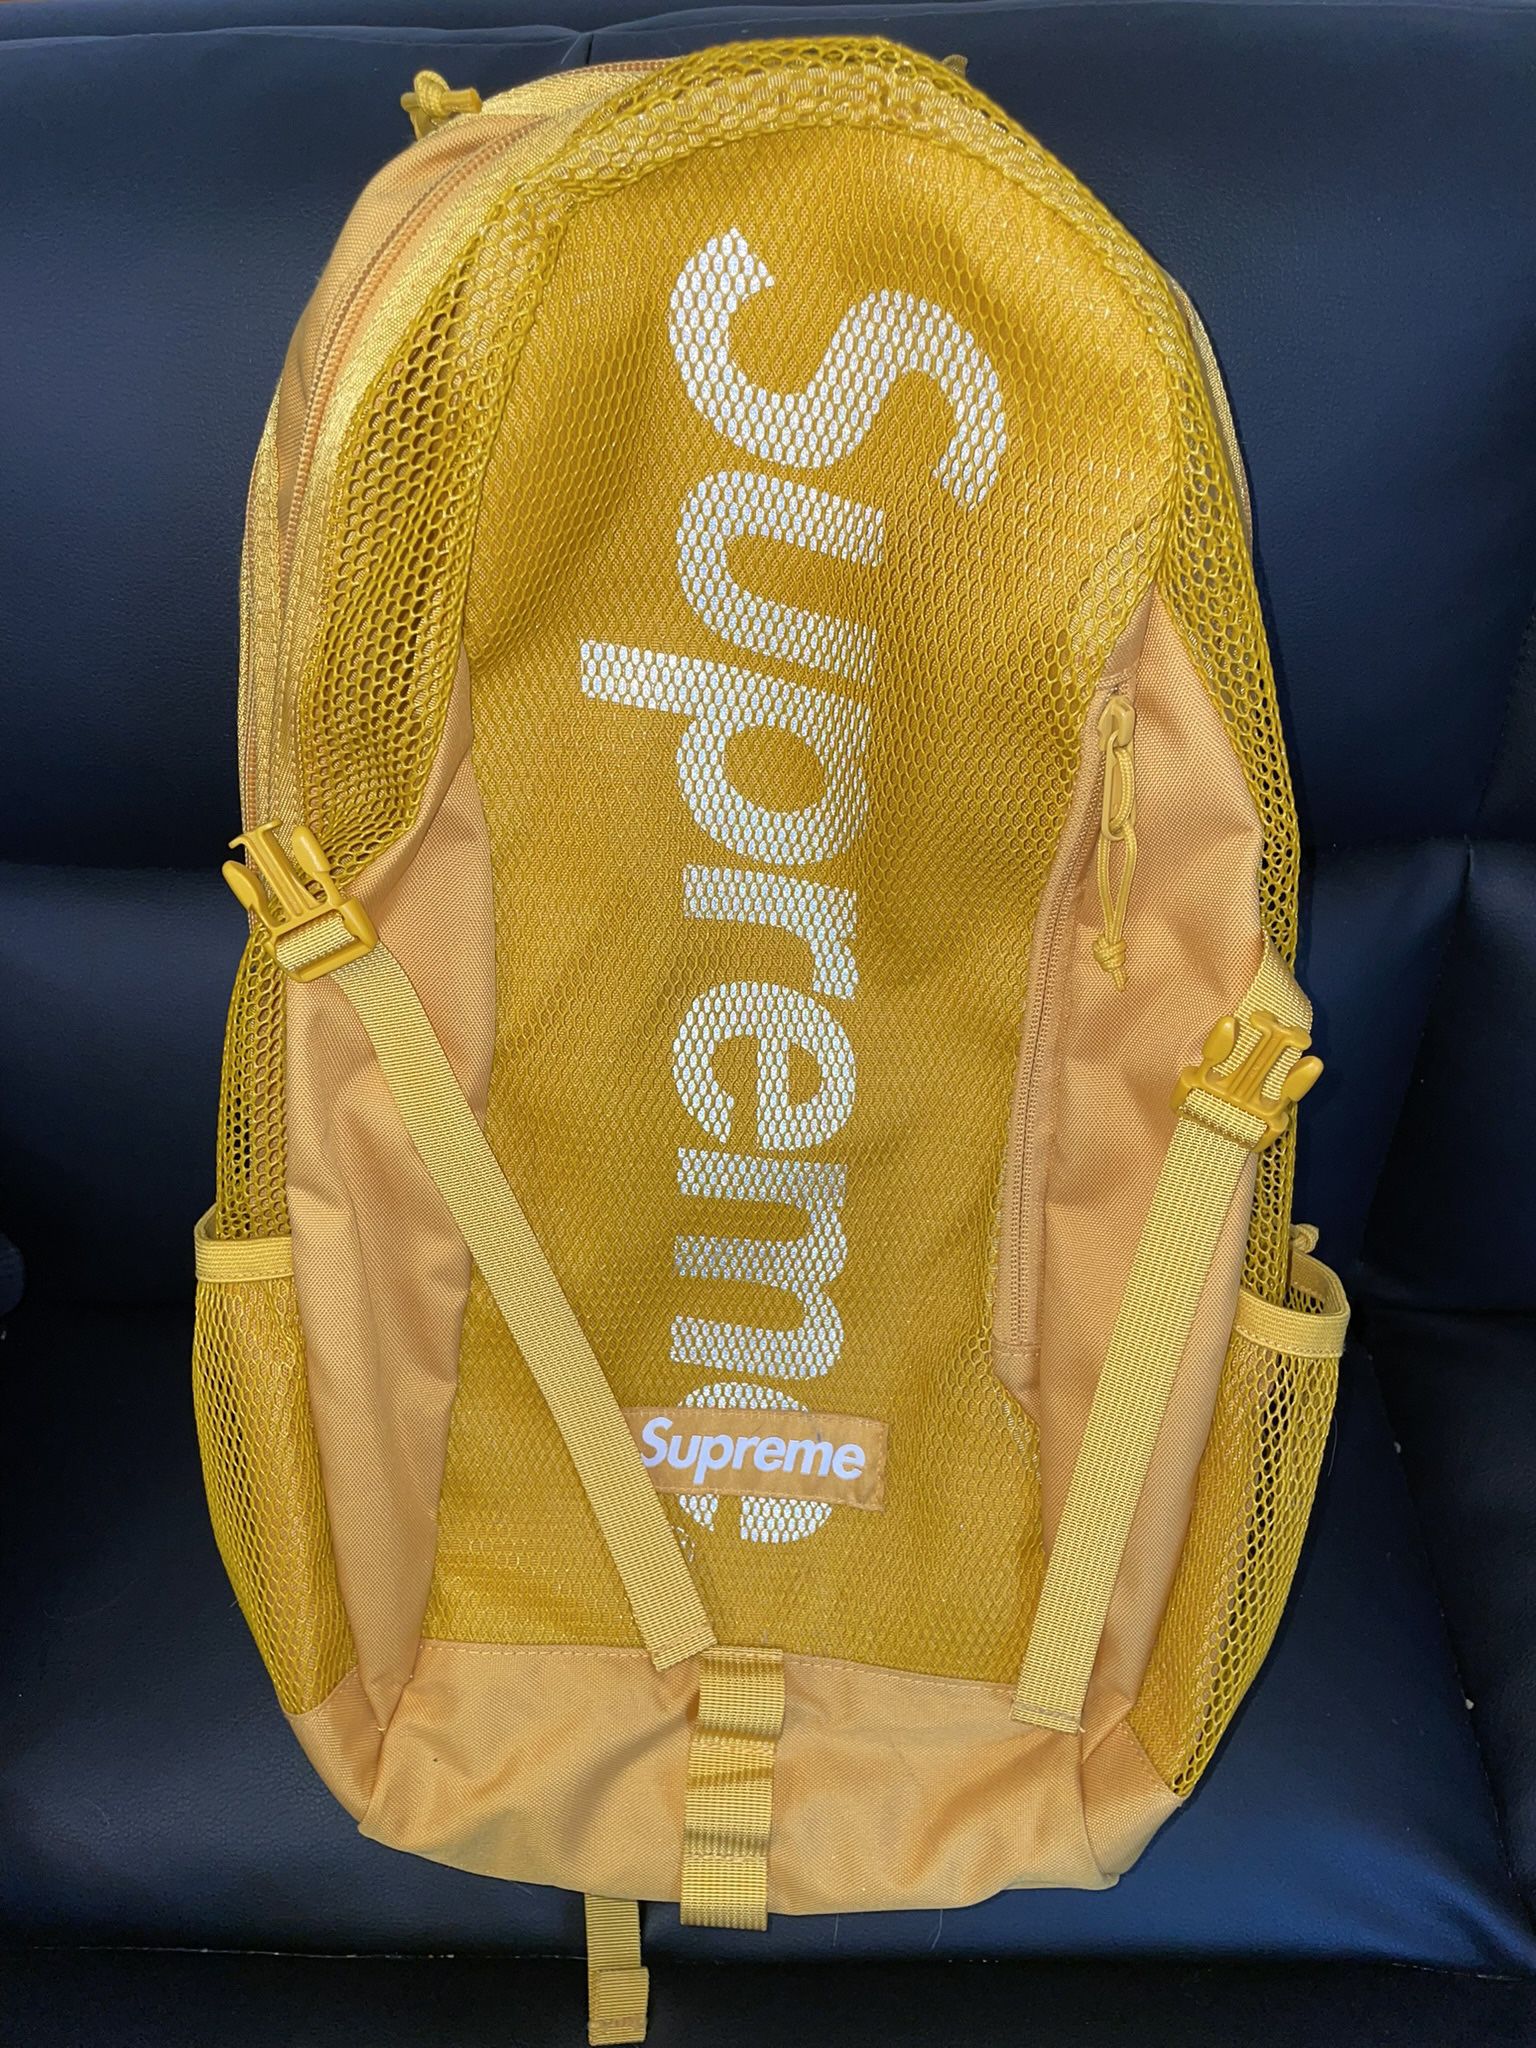 Supreme Olive Backpack FW20 Retail was $148 - Depop